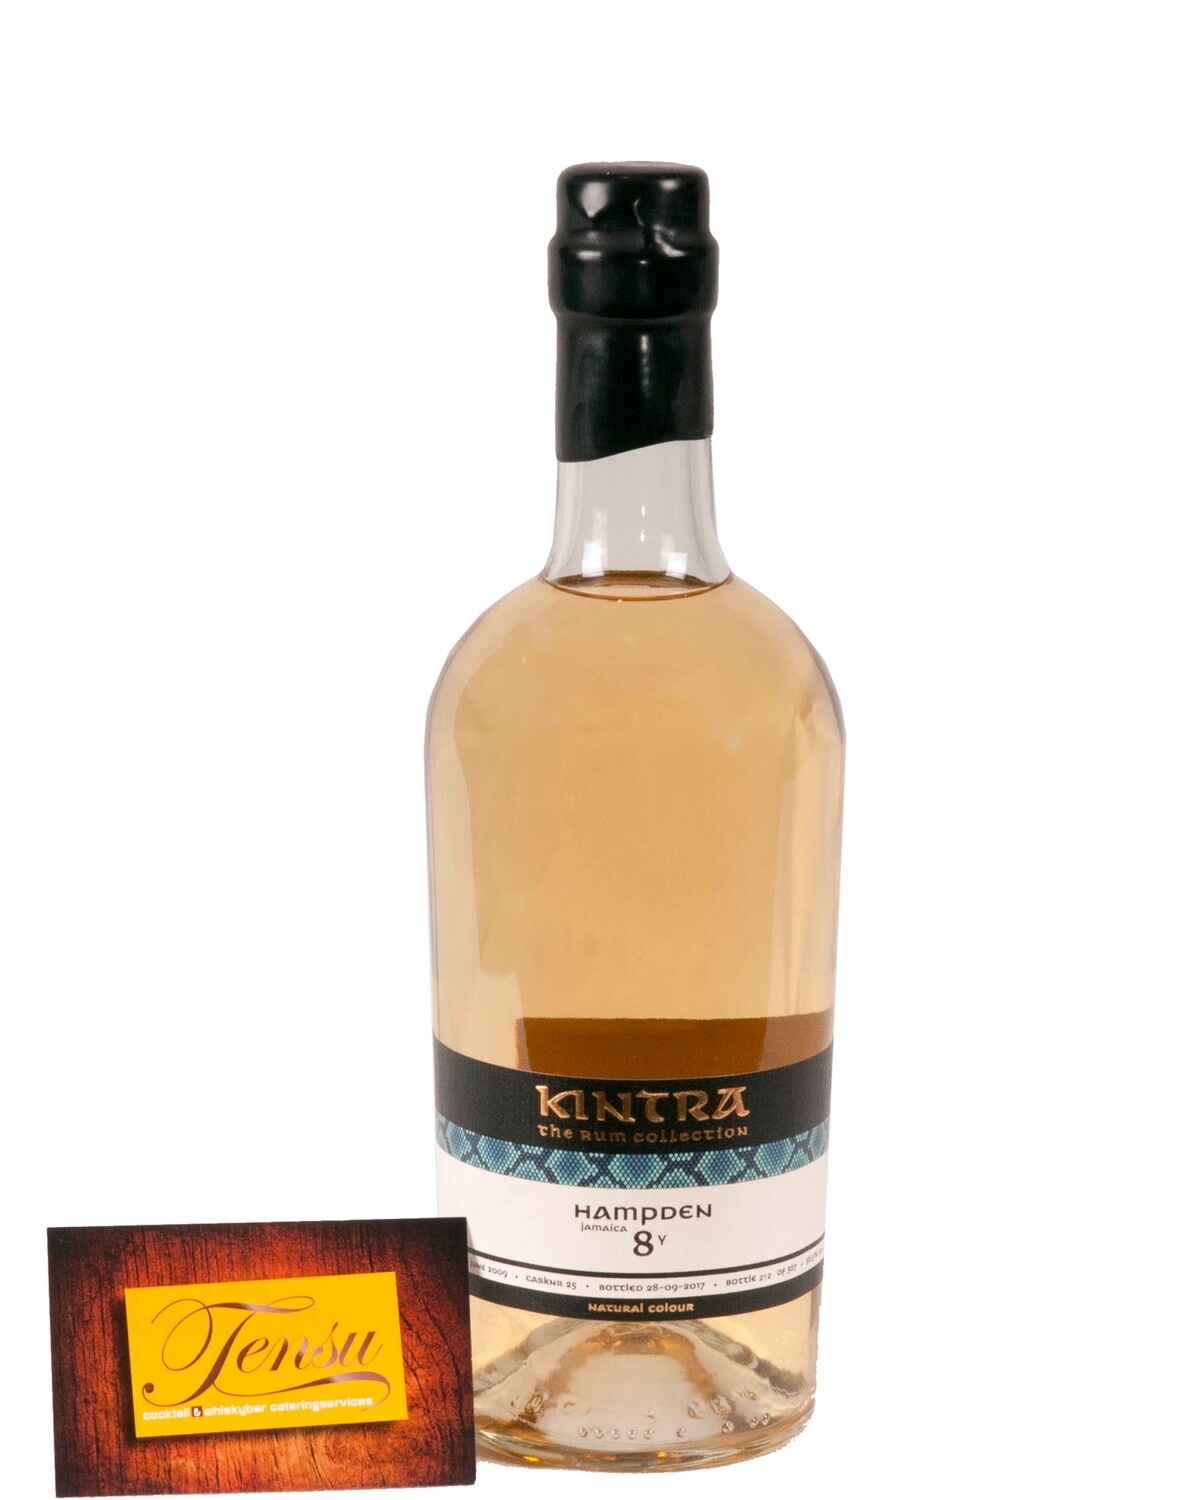 Hampden 8 Years Old Jamaica Rum (2009-2017) 56.5 "Kintra" [SAMPLE 2CL]